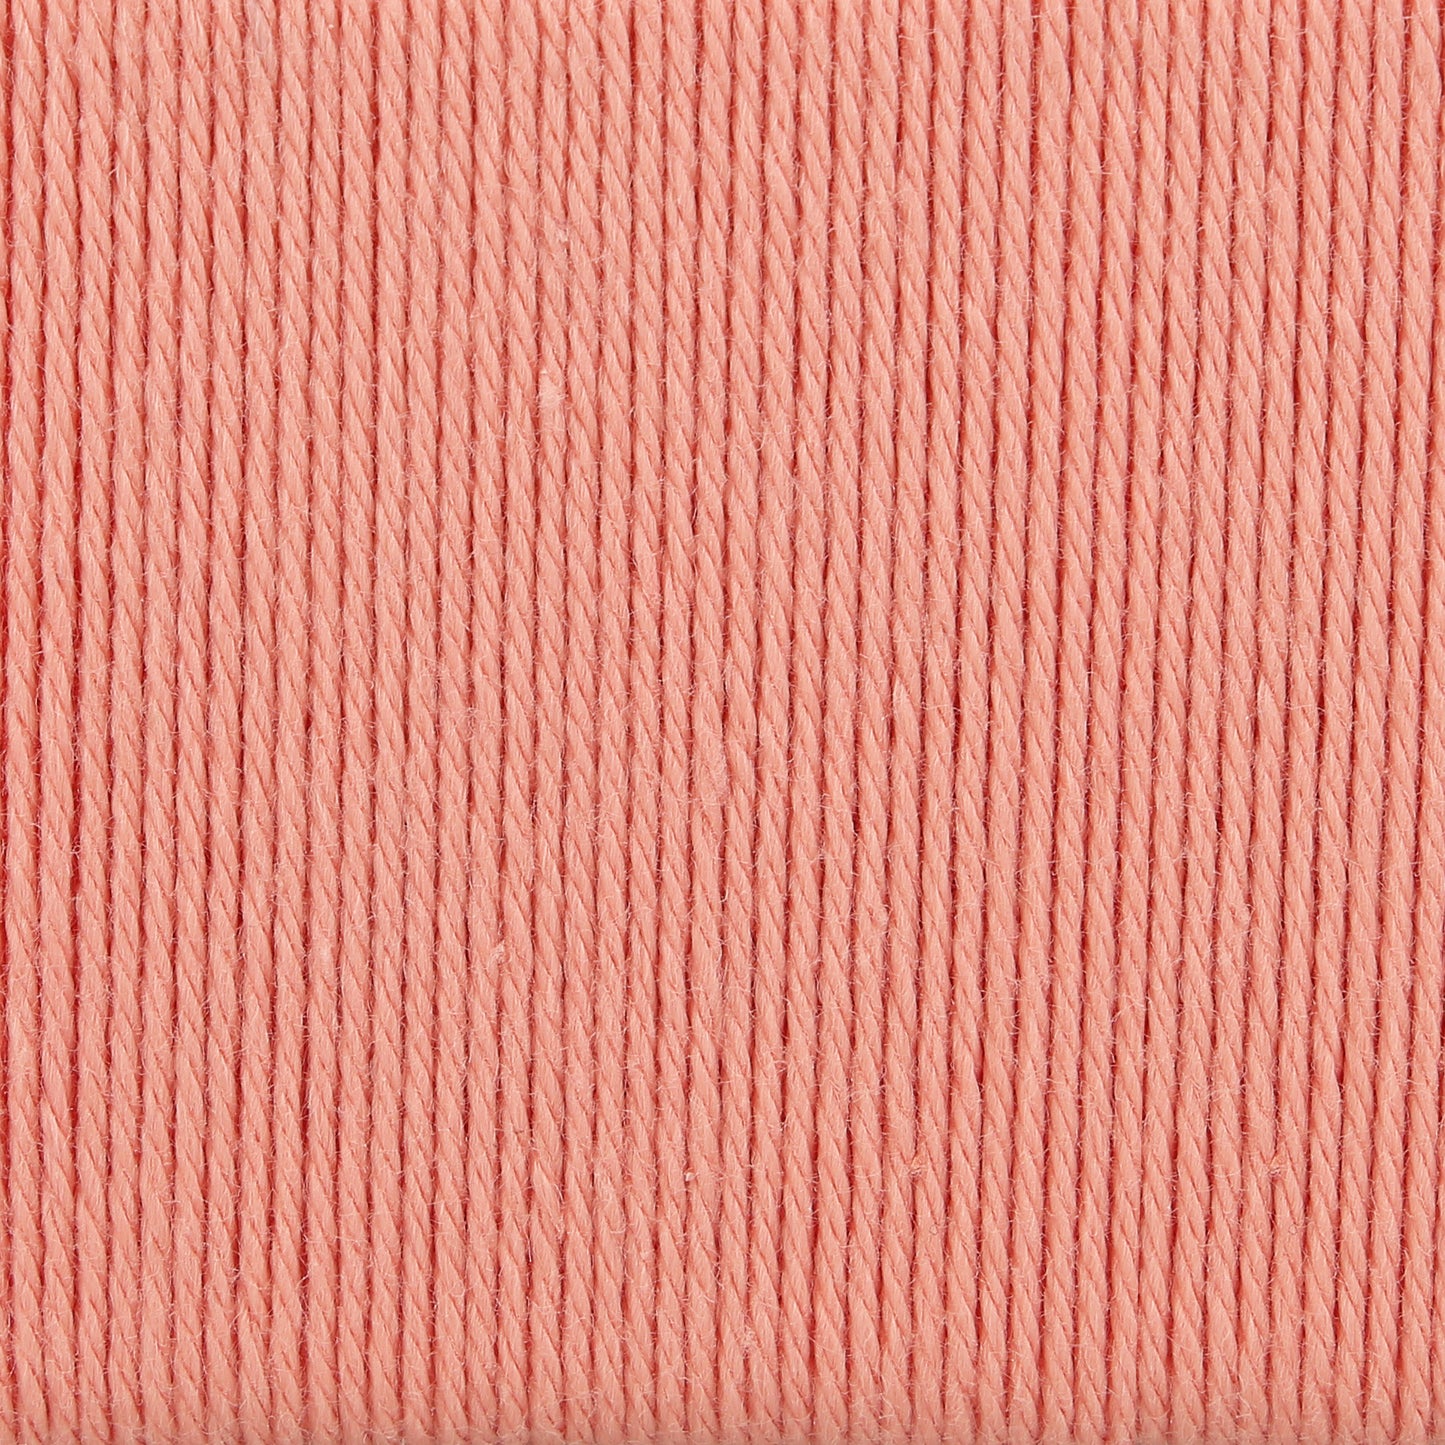 Anchor - Organic Cotton - 50g Ball - Salmon Pink